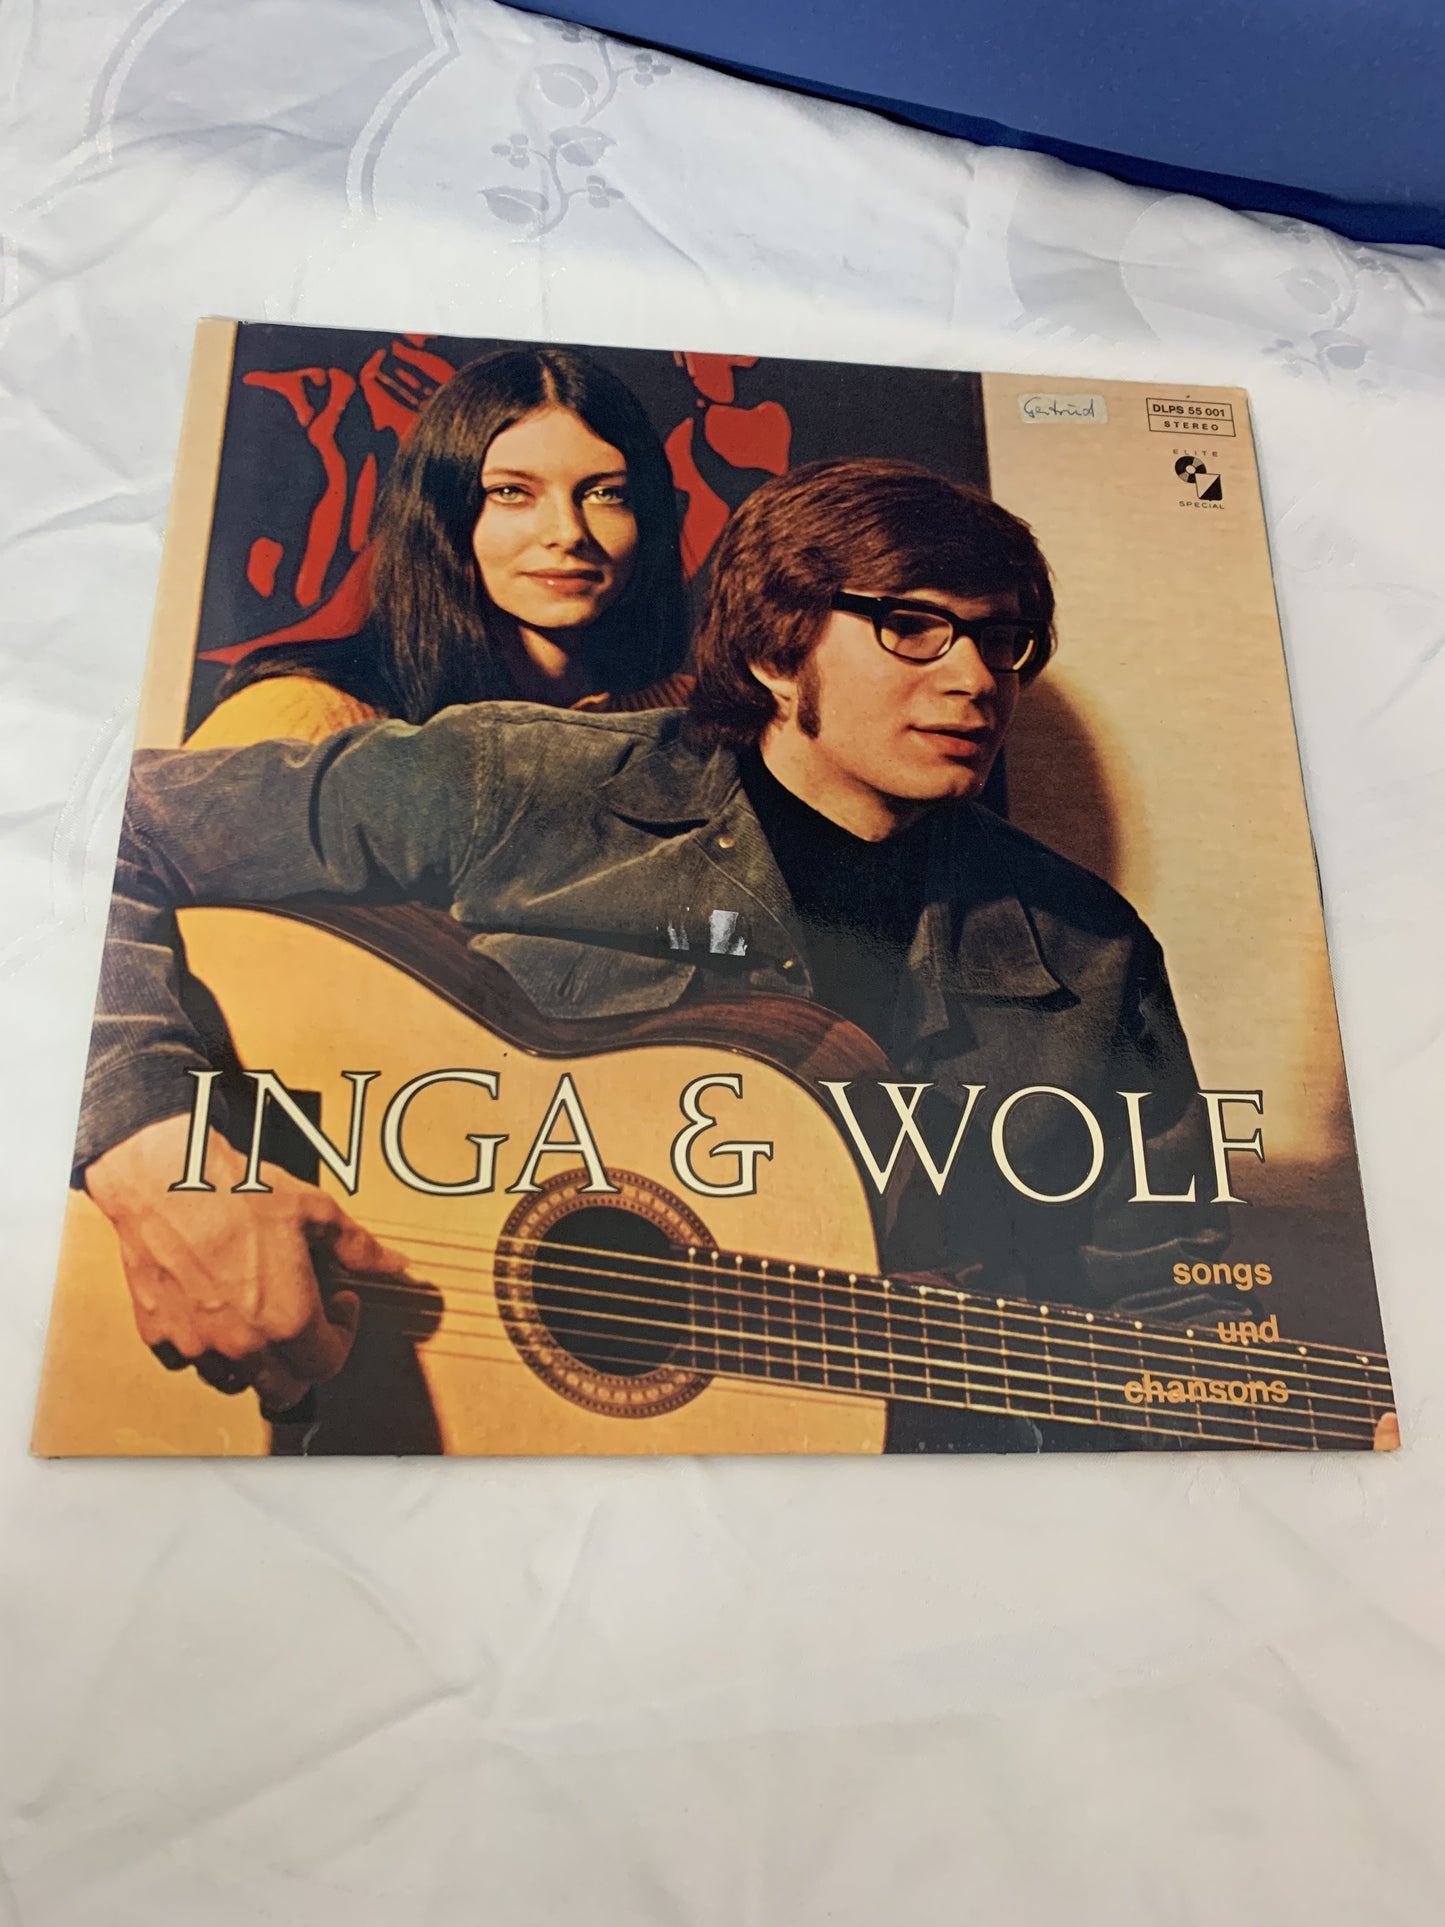 Inga & Wolf LP Songs und Chansons